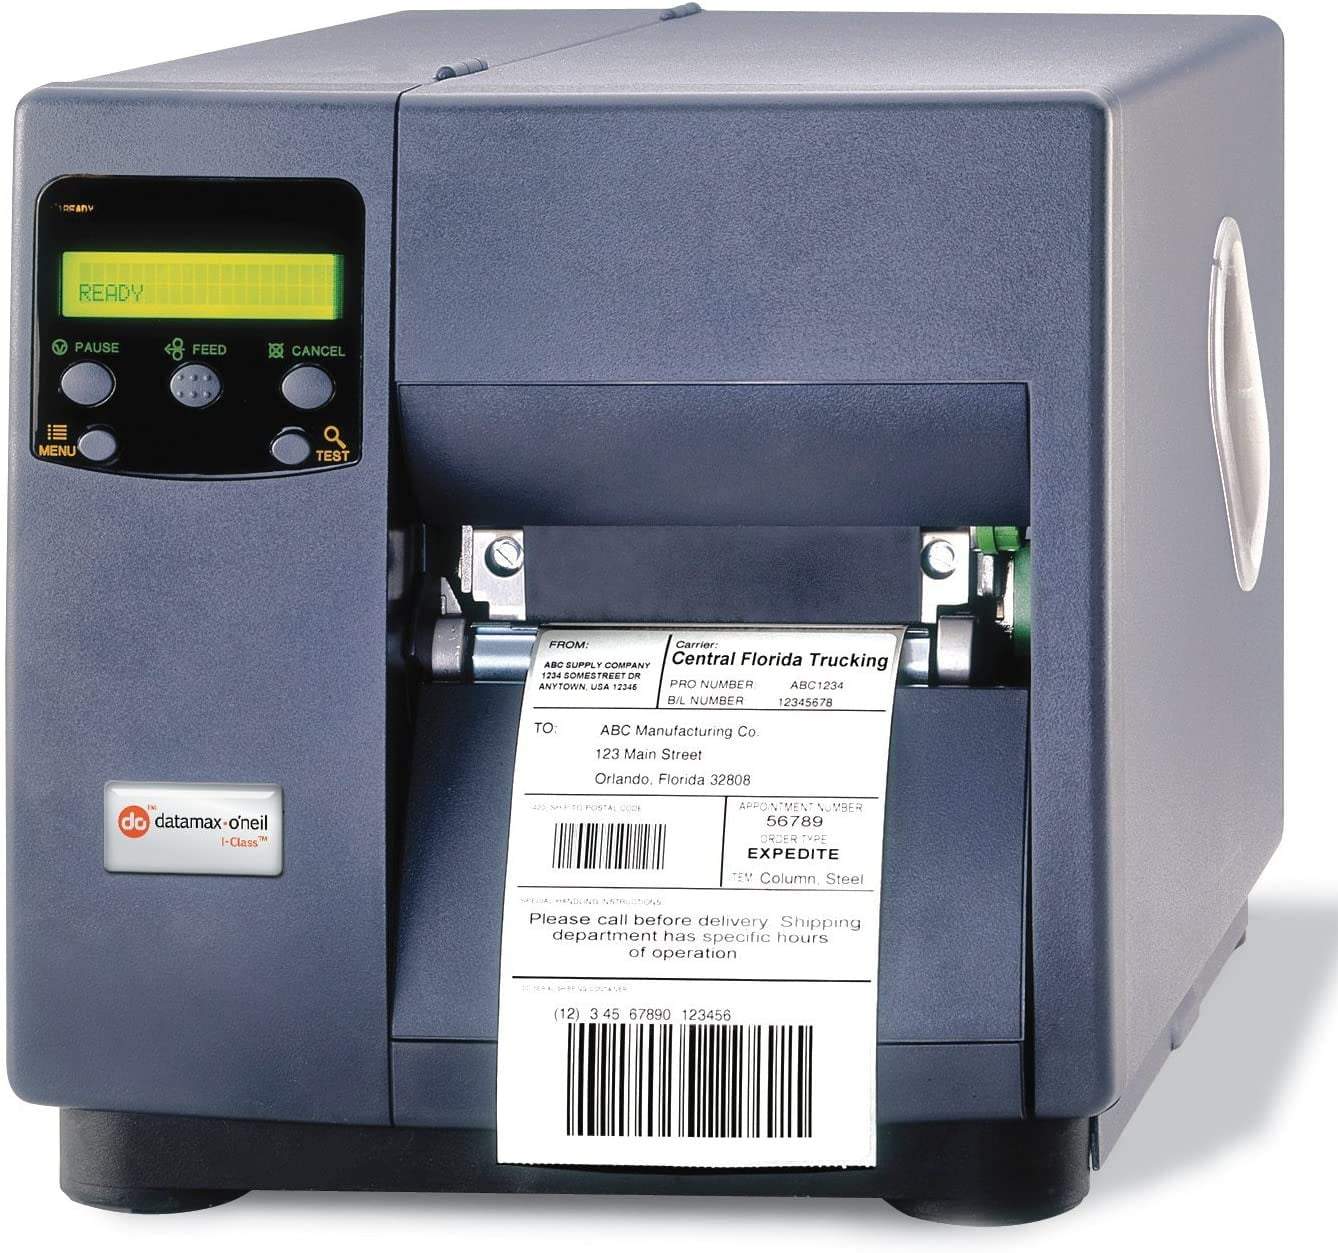 let at håndtere Blikkenslager Rise Honeywell Thermal Label Printers | Industrial I-Class Mark II Barcodes –  Jet City Label